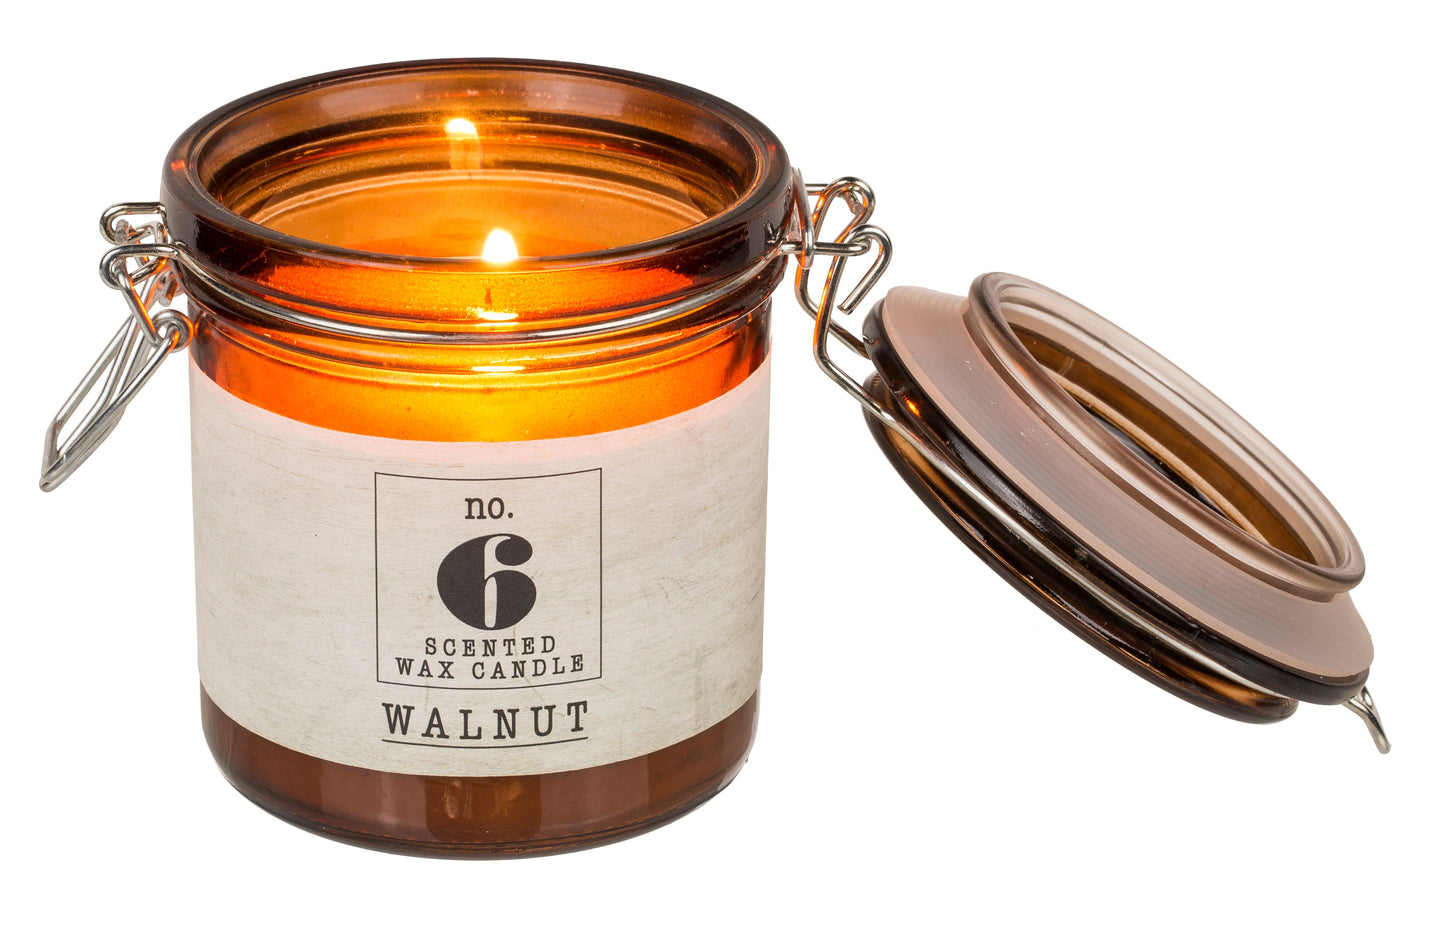 Walnut Scented Candle in Mason Jar